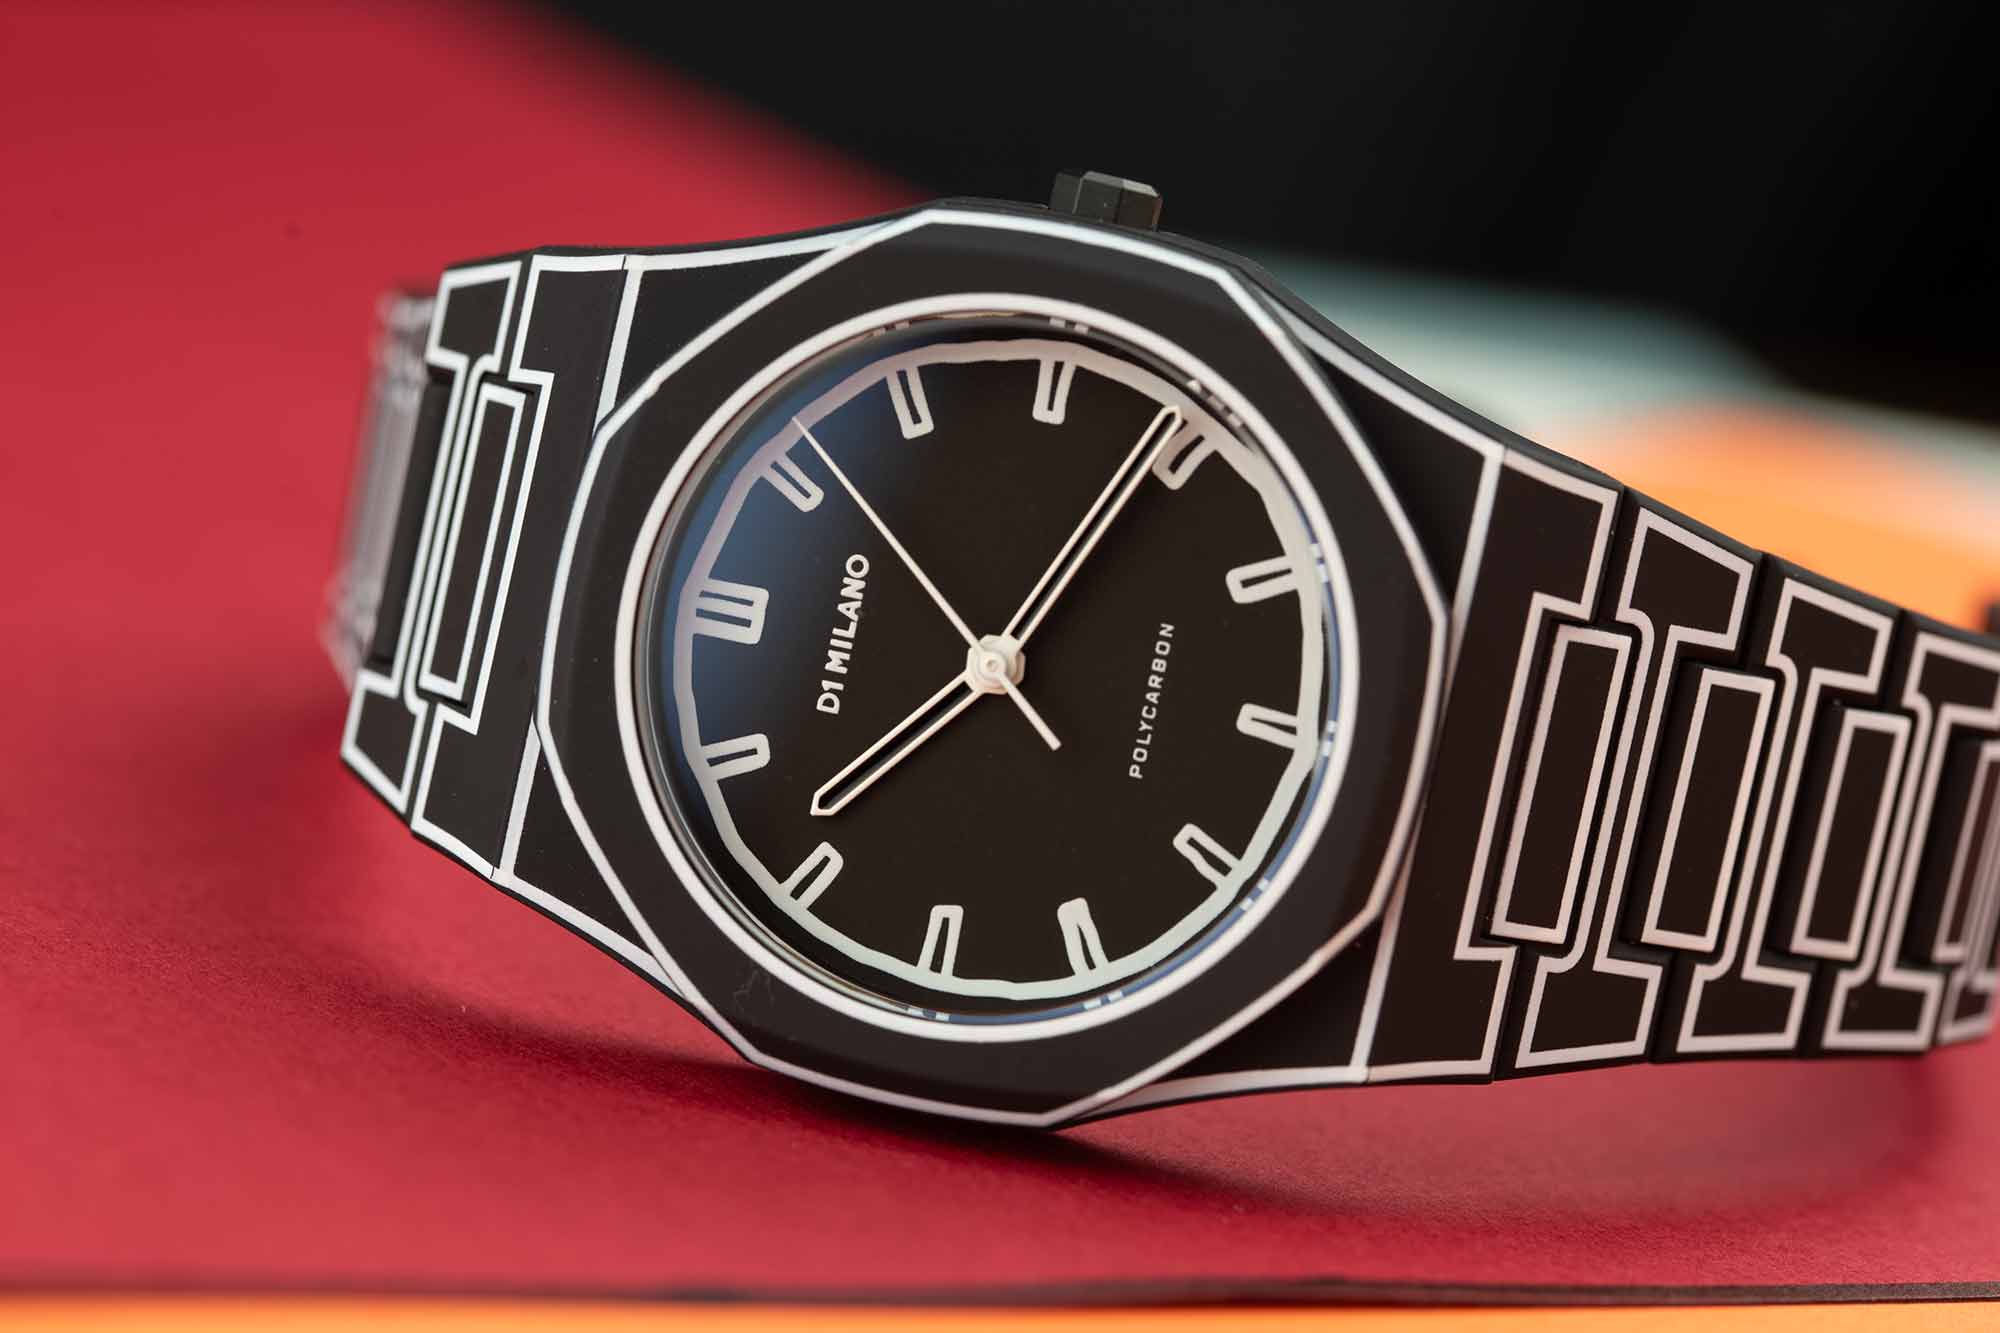 Buy D1 Milano UTBJKS Ultra Thin Watch for Men Online @ Tata CLiQ Luxury